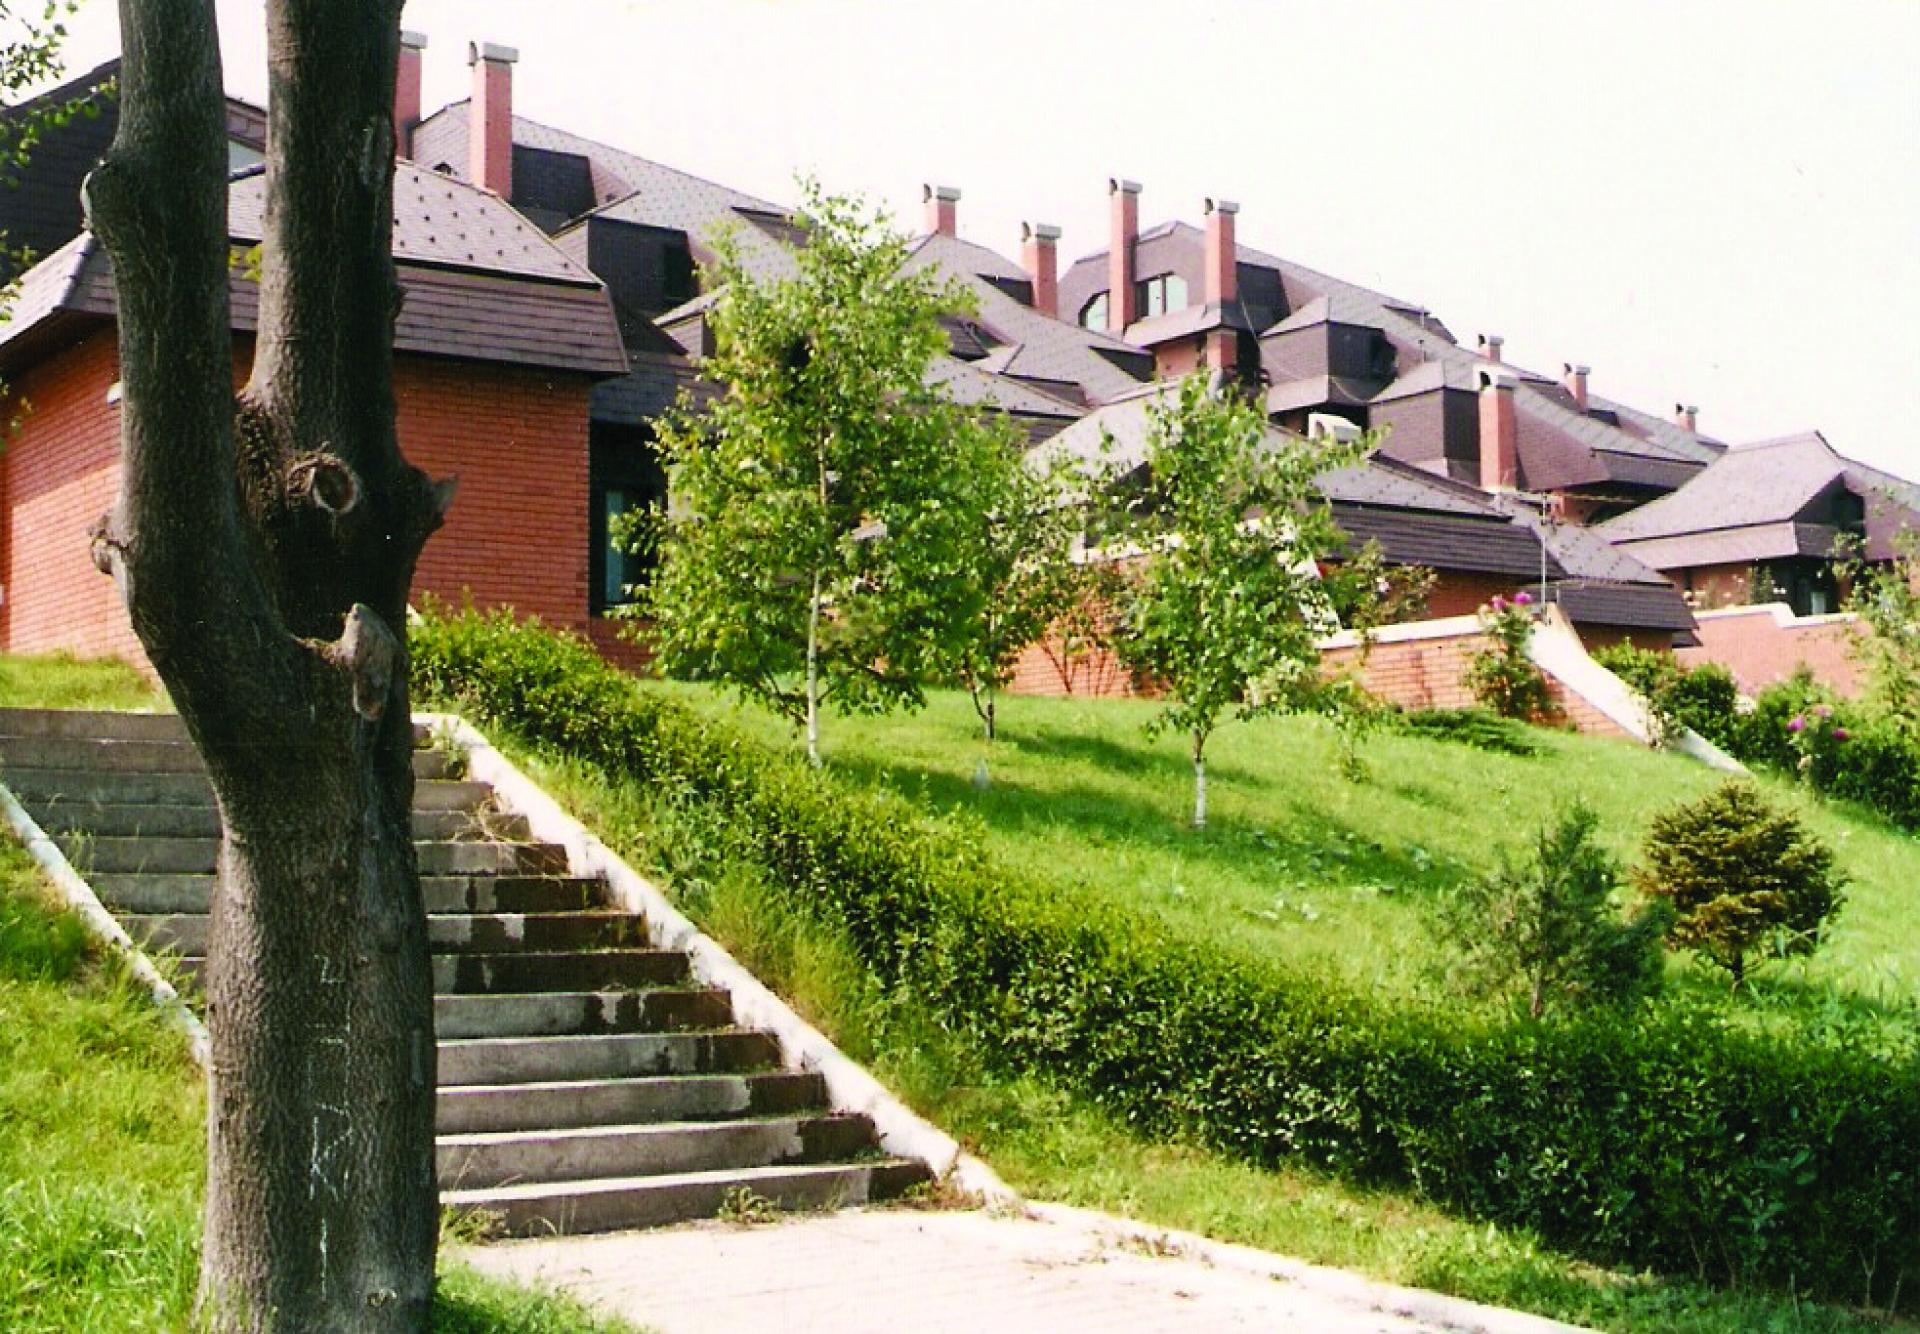 Housing in greenery at Višnjička Banja. | Courtesy of Dragoljub Bakić